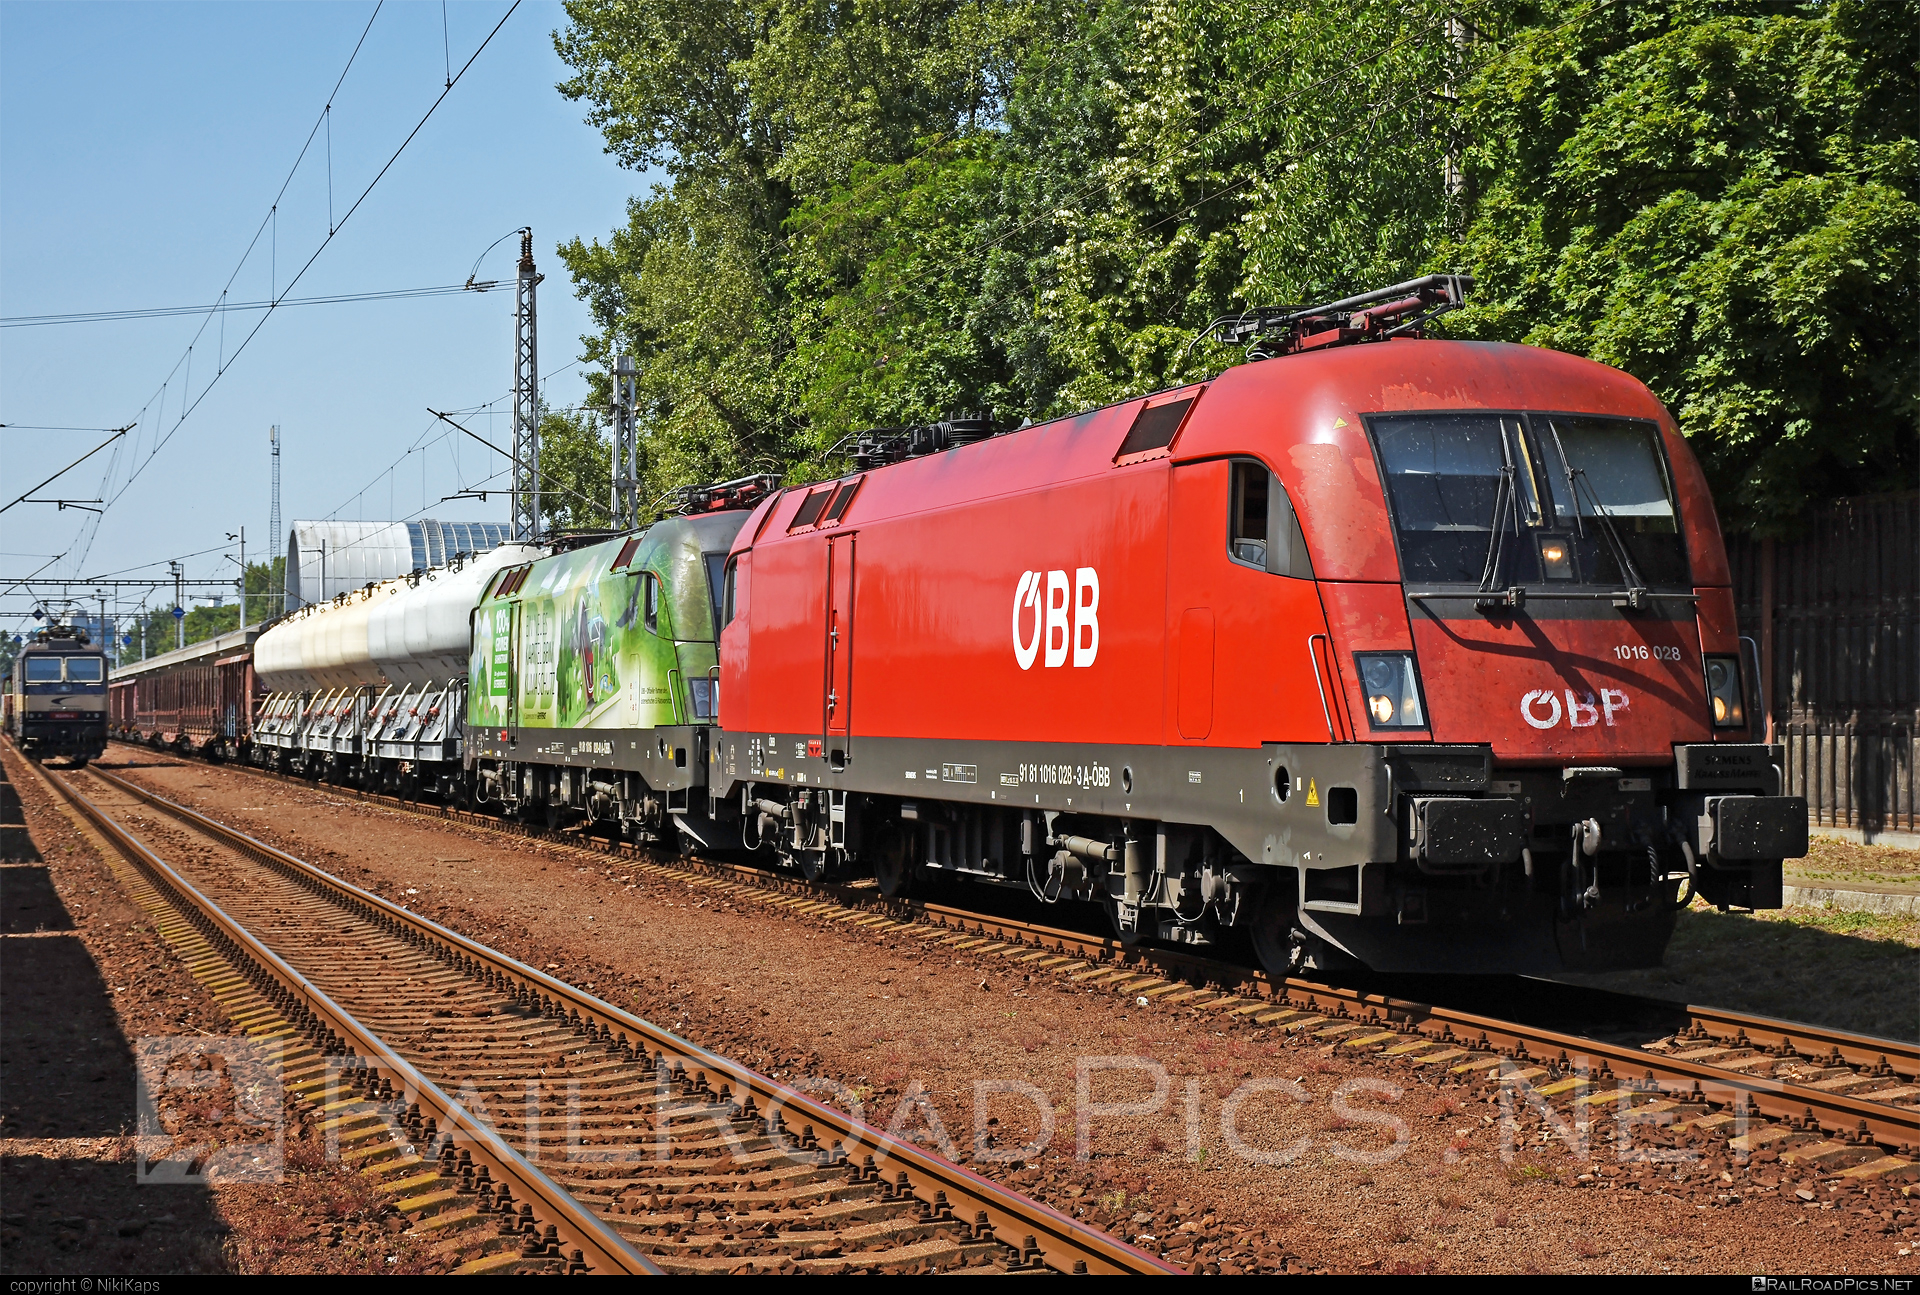 Siemens ES 64 U2 - 1016 028 operated by Rail Cargo Austria AG #es64 #es64u2 #eurosprinter #mixofcargo #obb #osterreichischebundesbahnen #rcw #siemens #siemensEs64 #siemensEs64u2 #siemenstaurus #taurus #tauruslocomotive